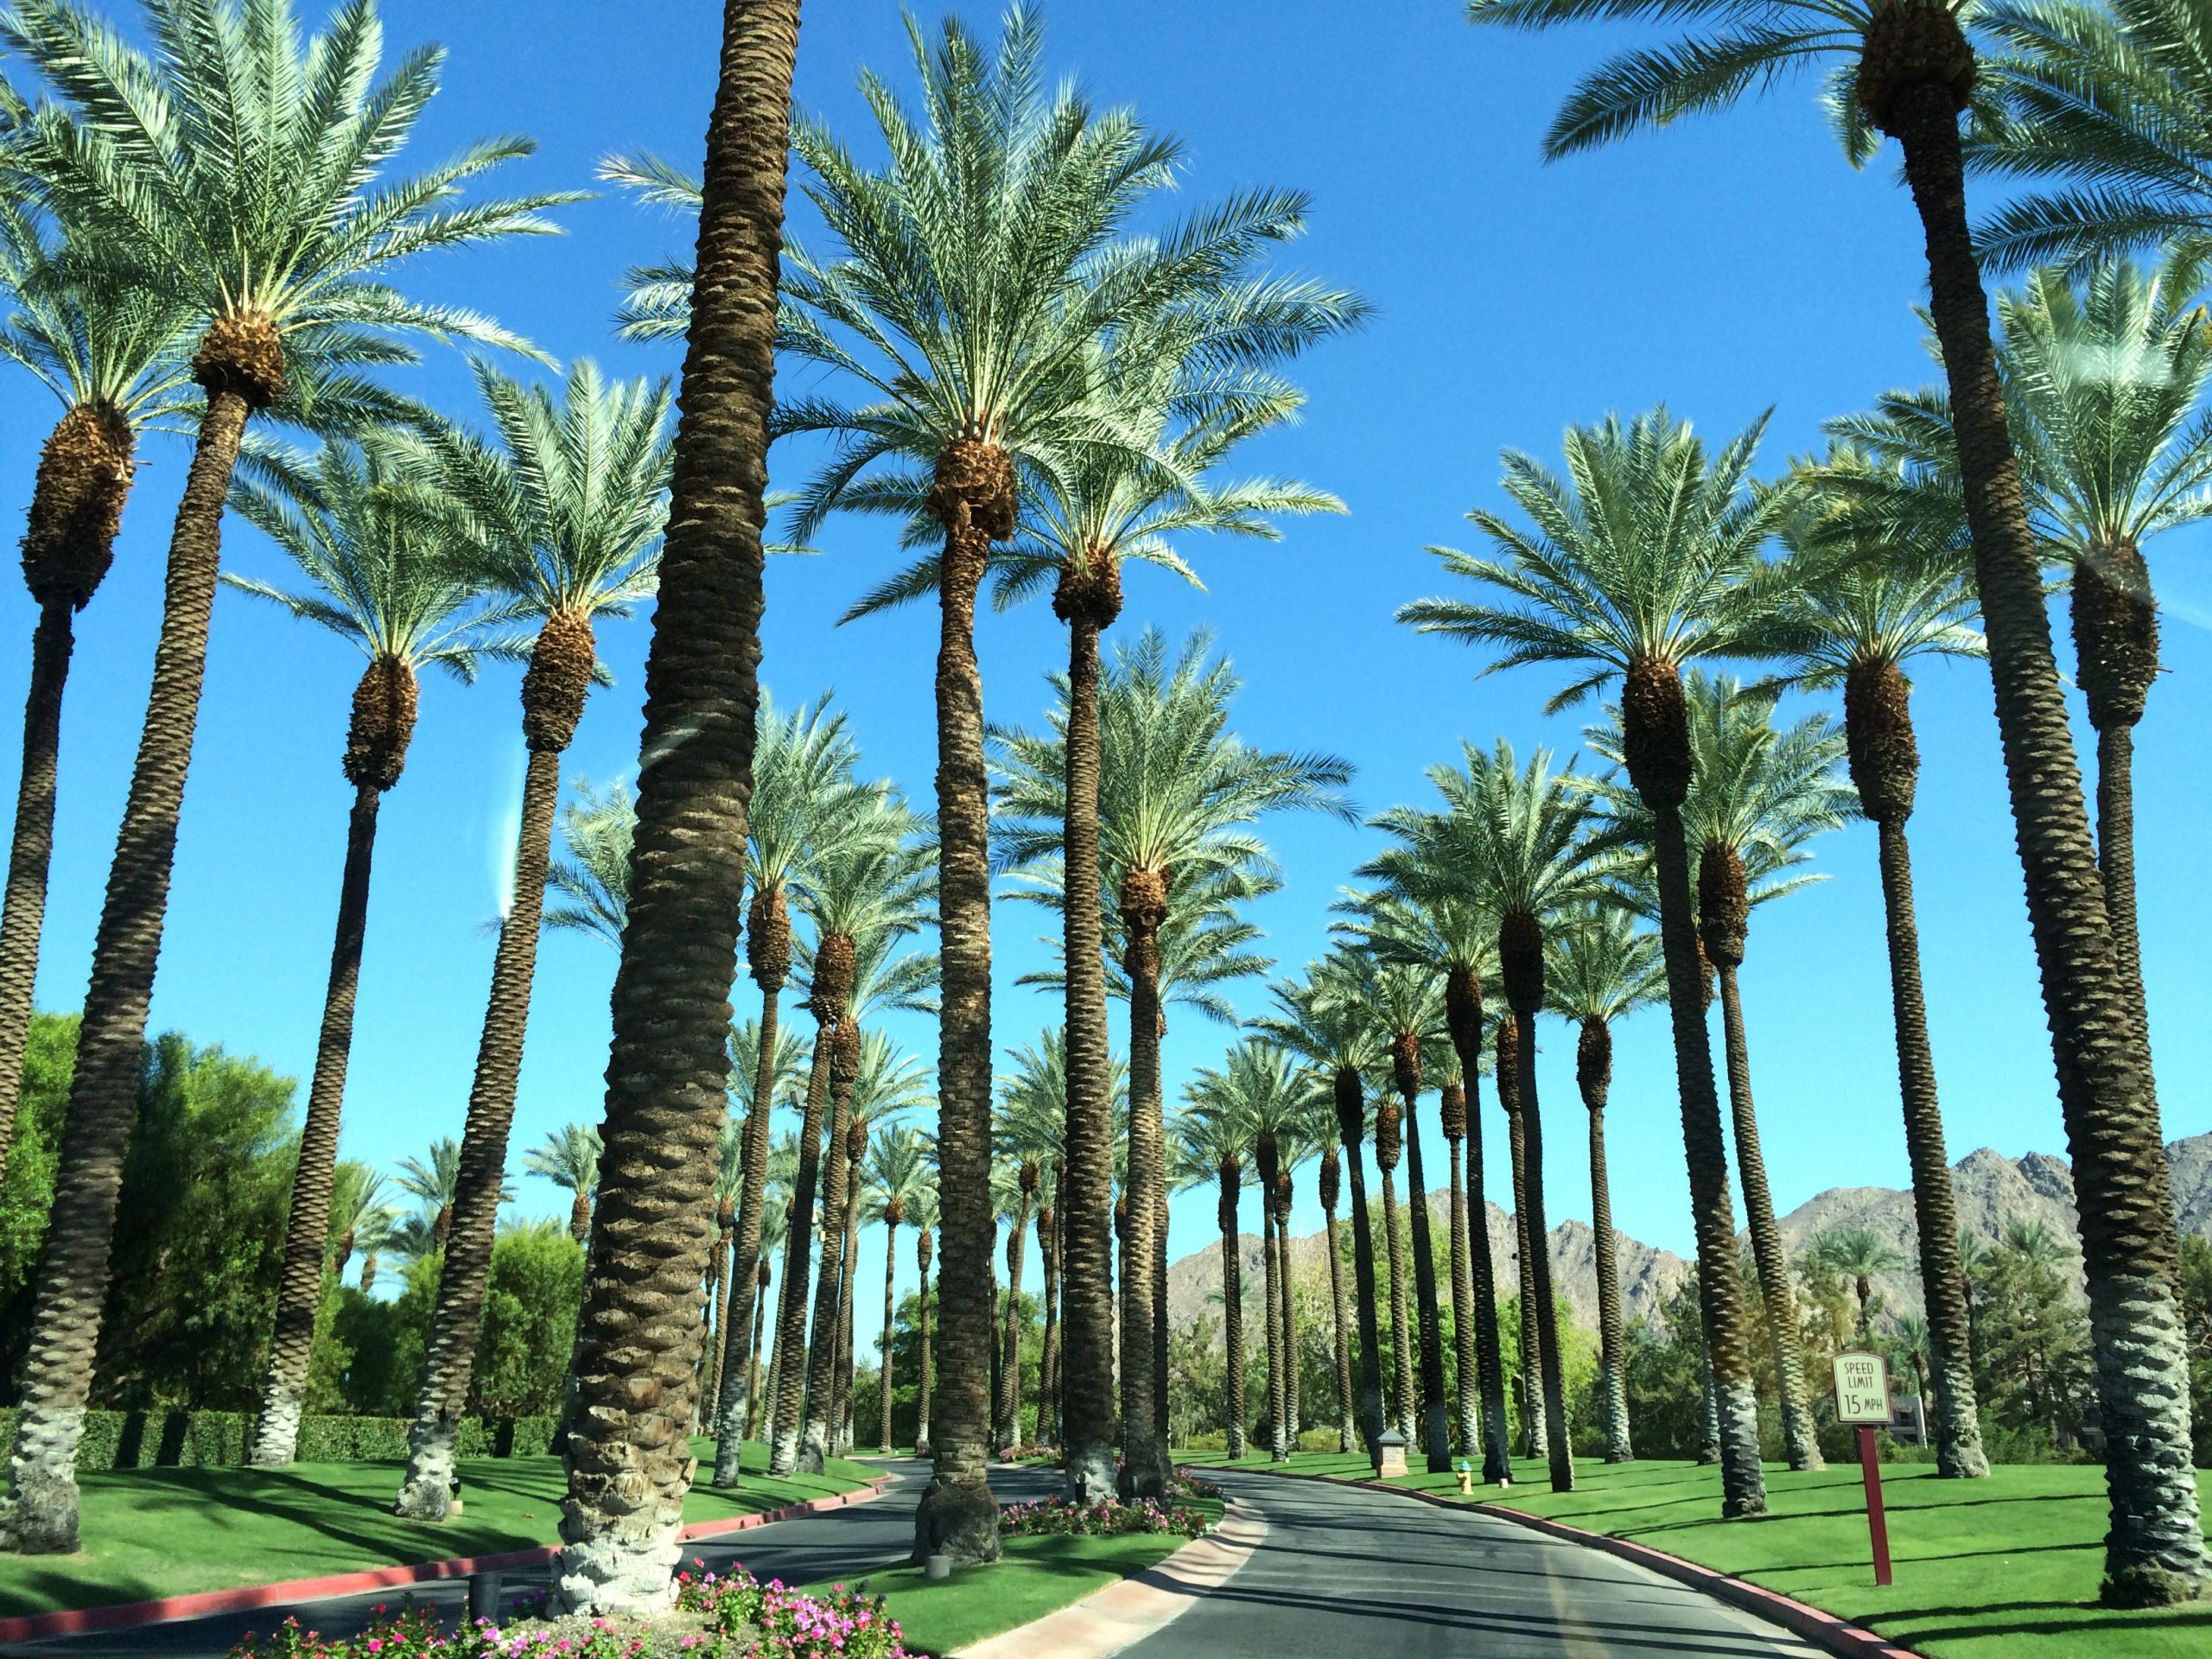 Cabazon Outlets - Visit Palm Springs